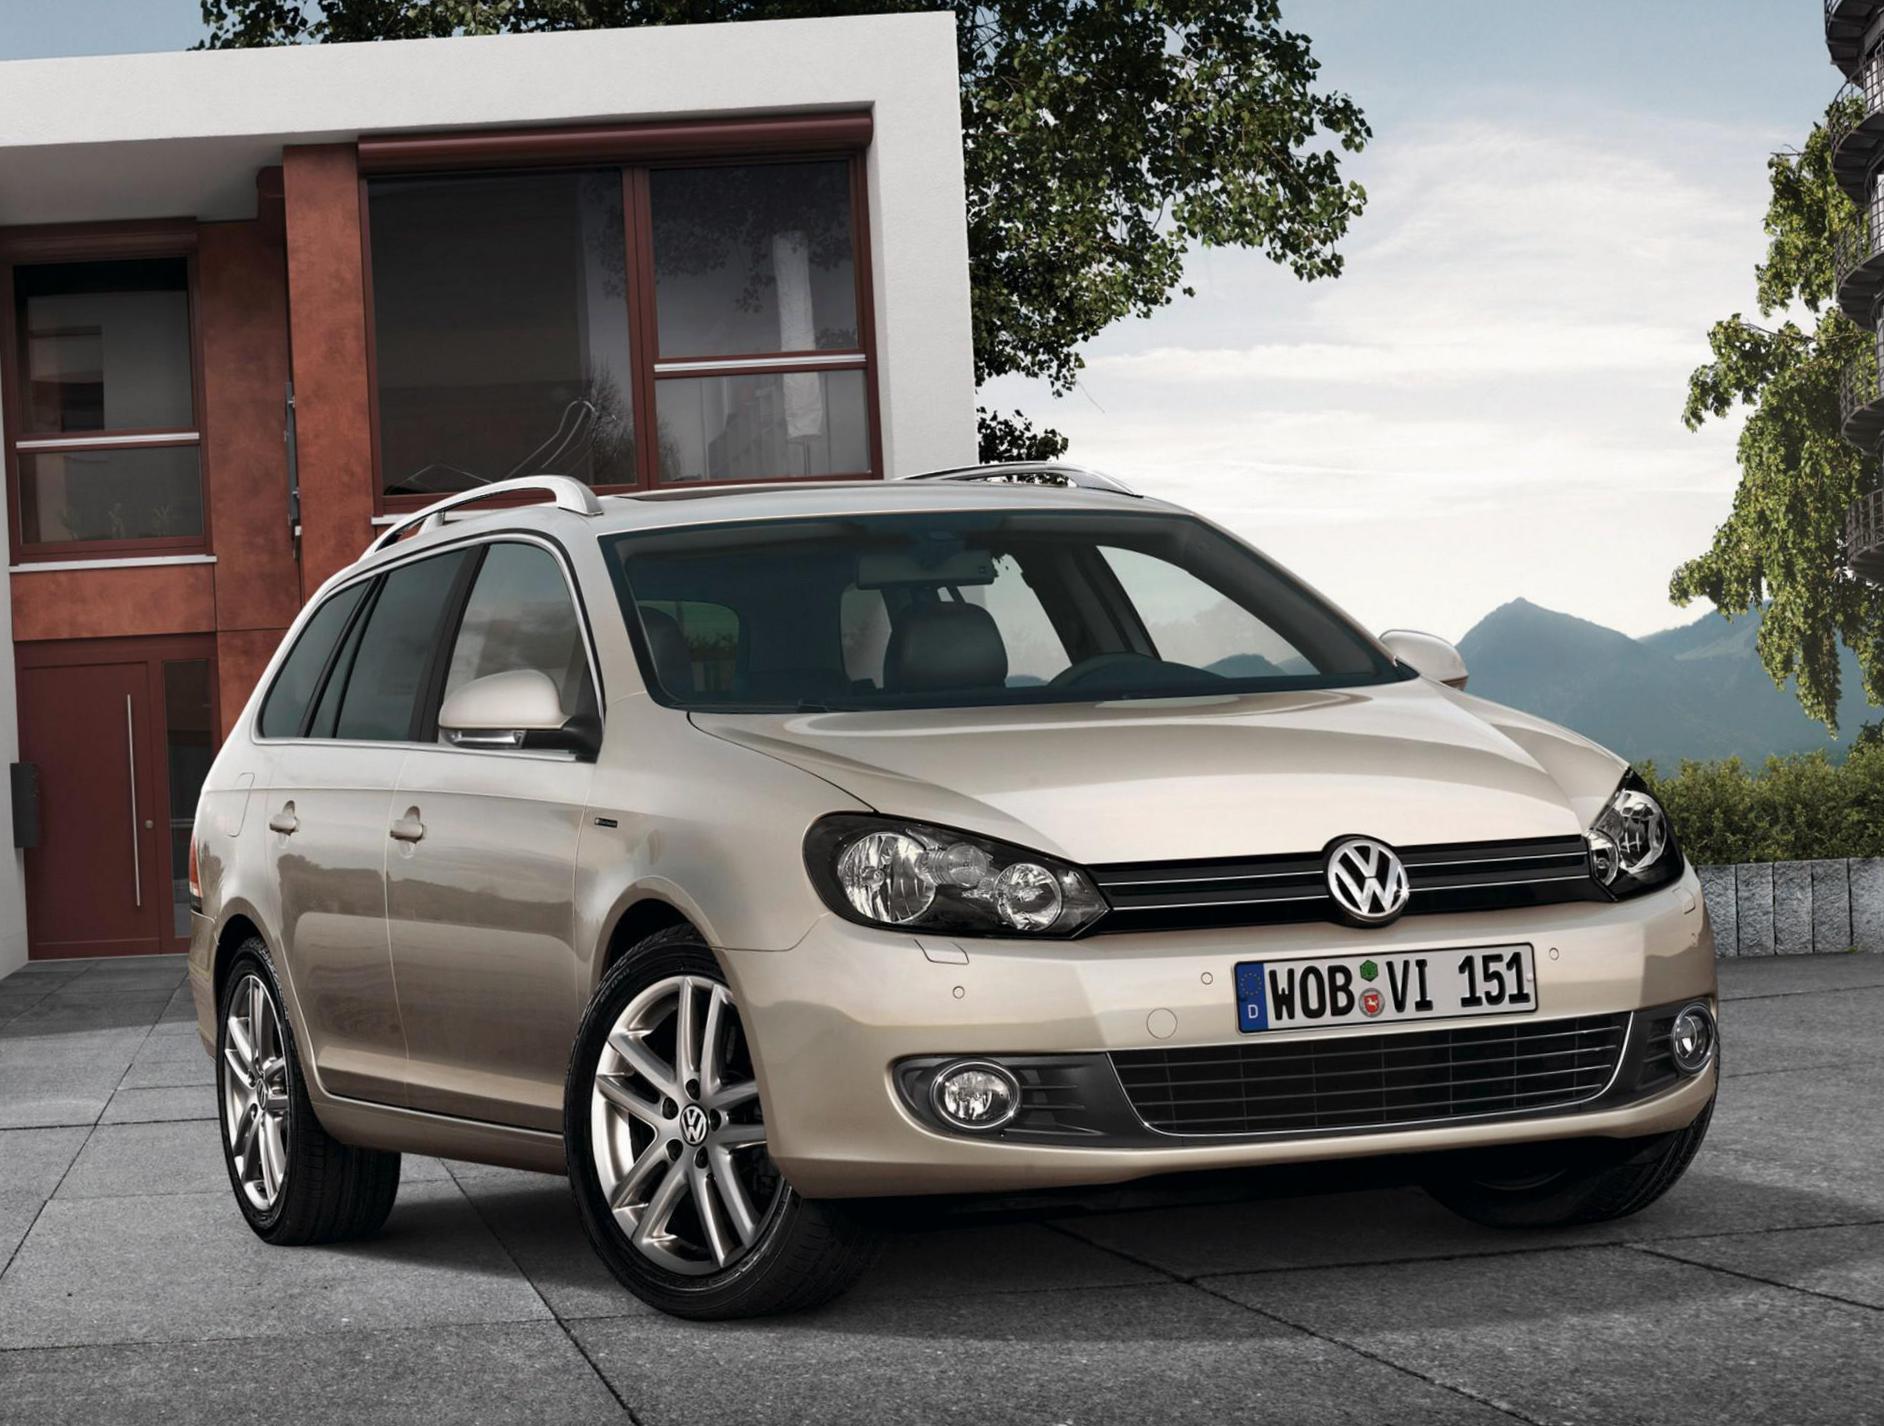 Golf Variant Volkswagen lease 2013